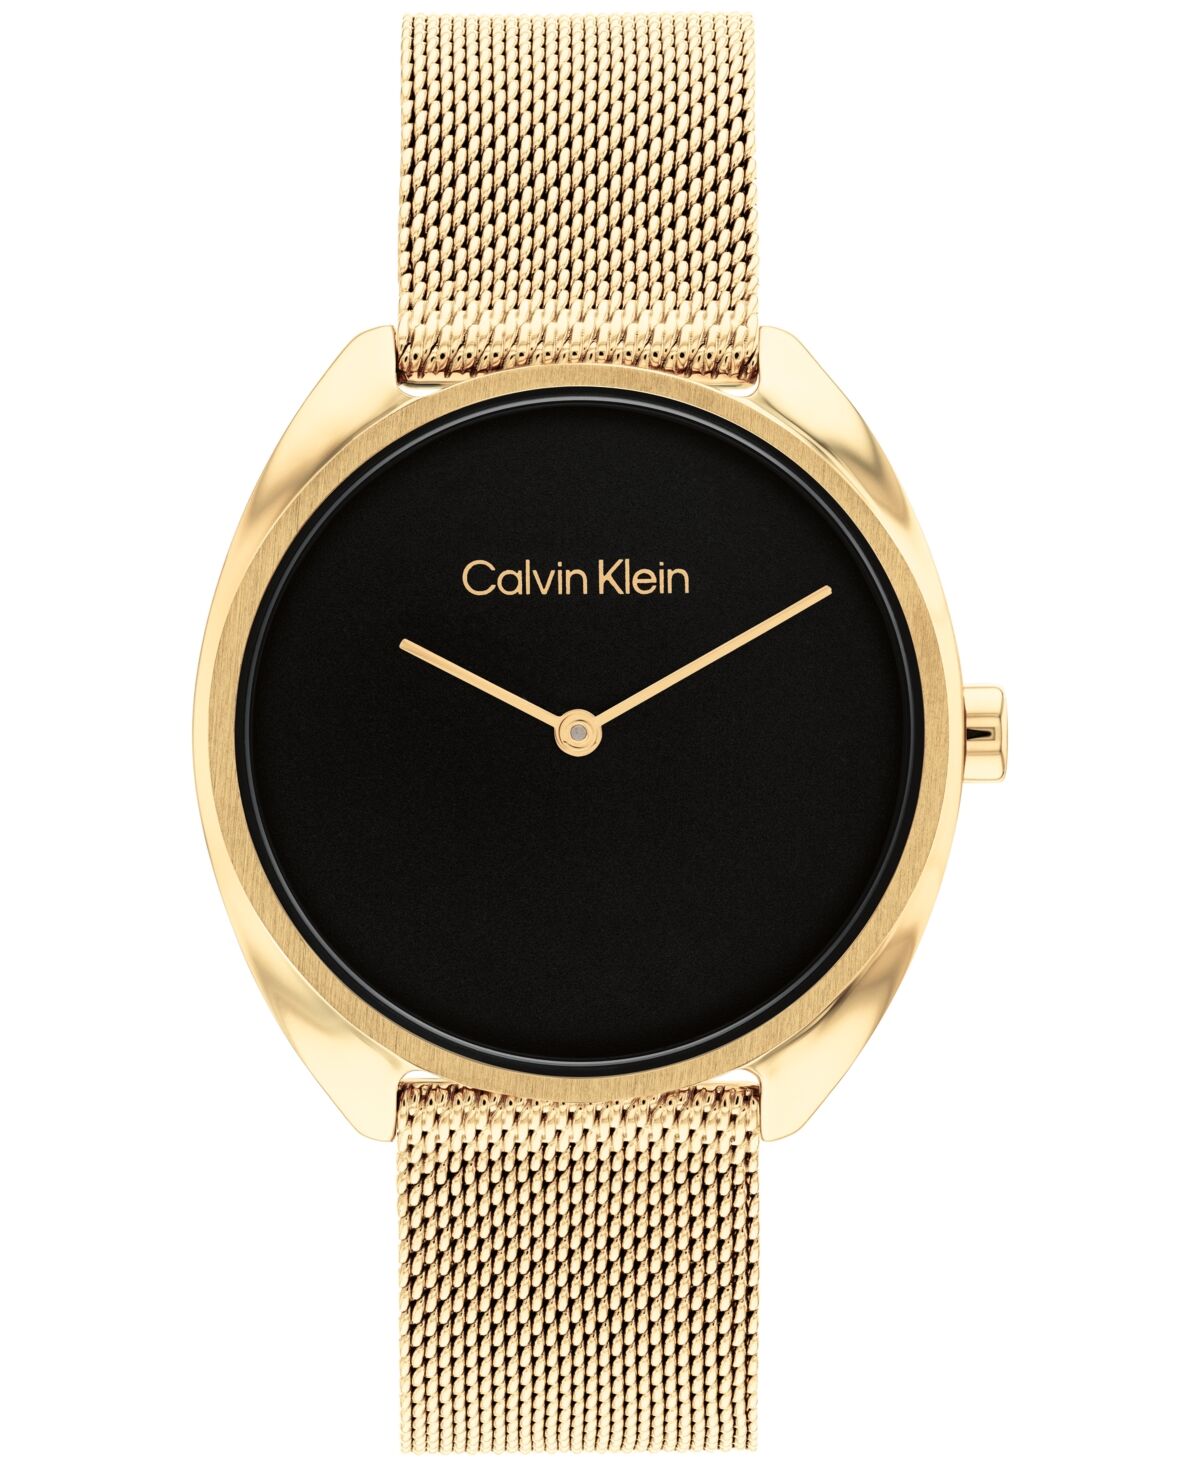 Calvin Klein Women's Gold-Tone Stainless Steel Mesh Bracelet Watch 34mm - Gold